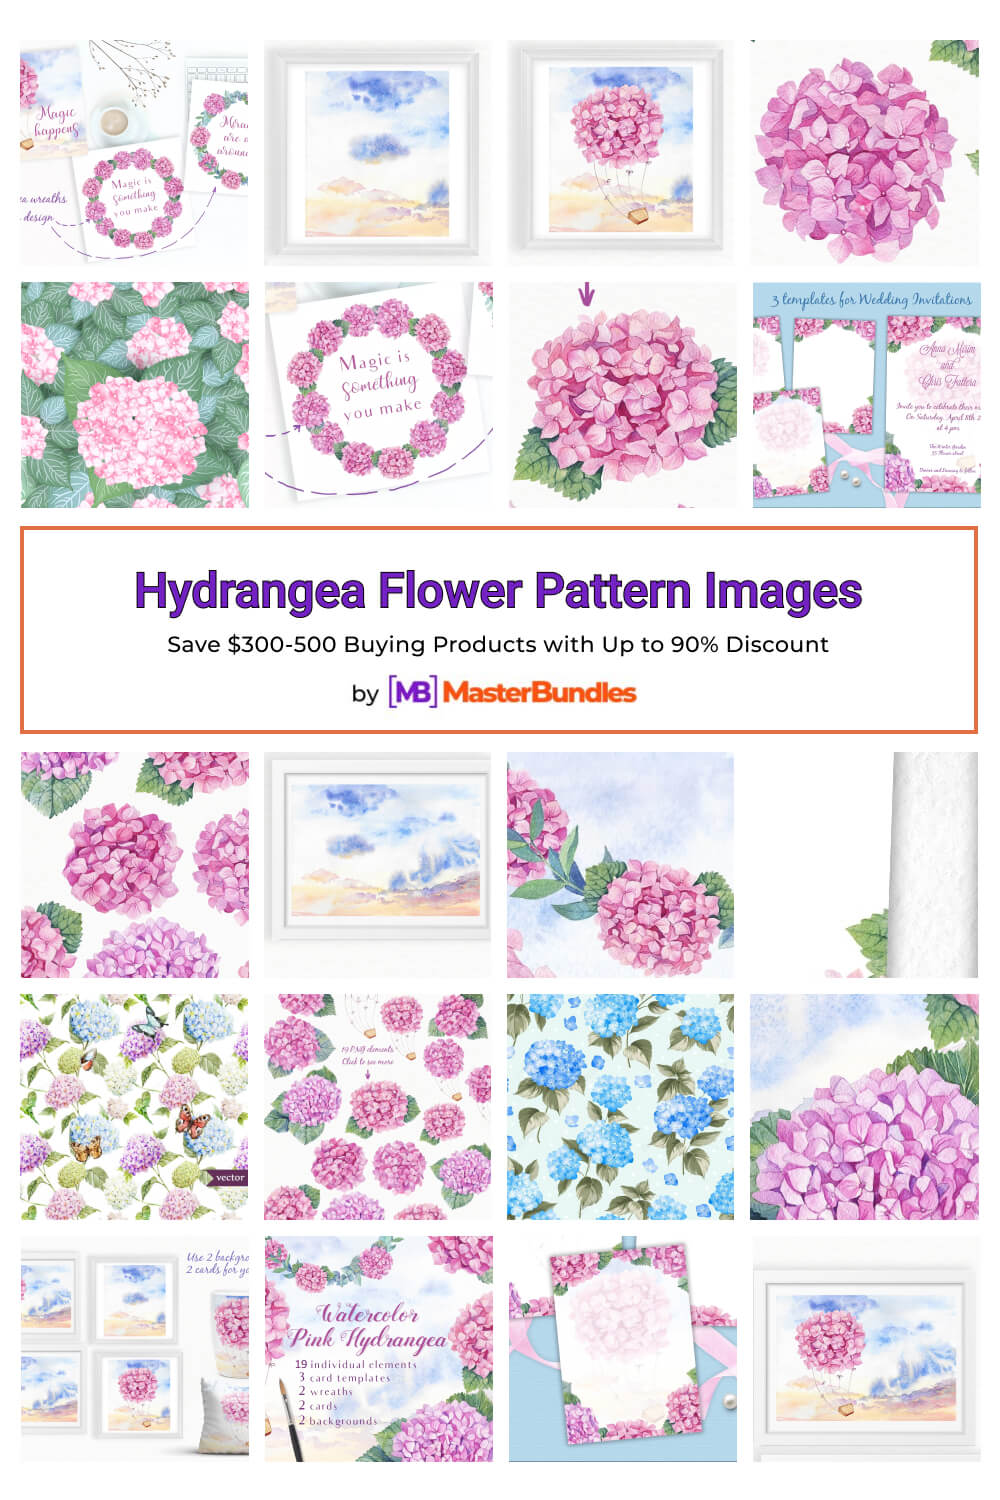 hydrangea flower pattern images pinterest image.